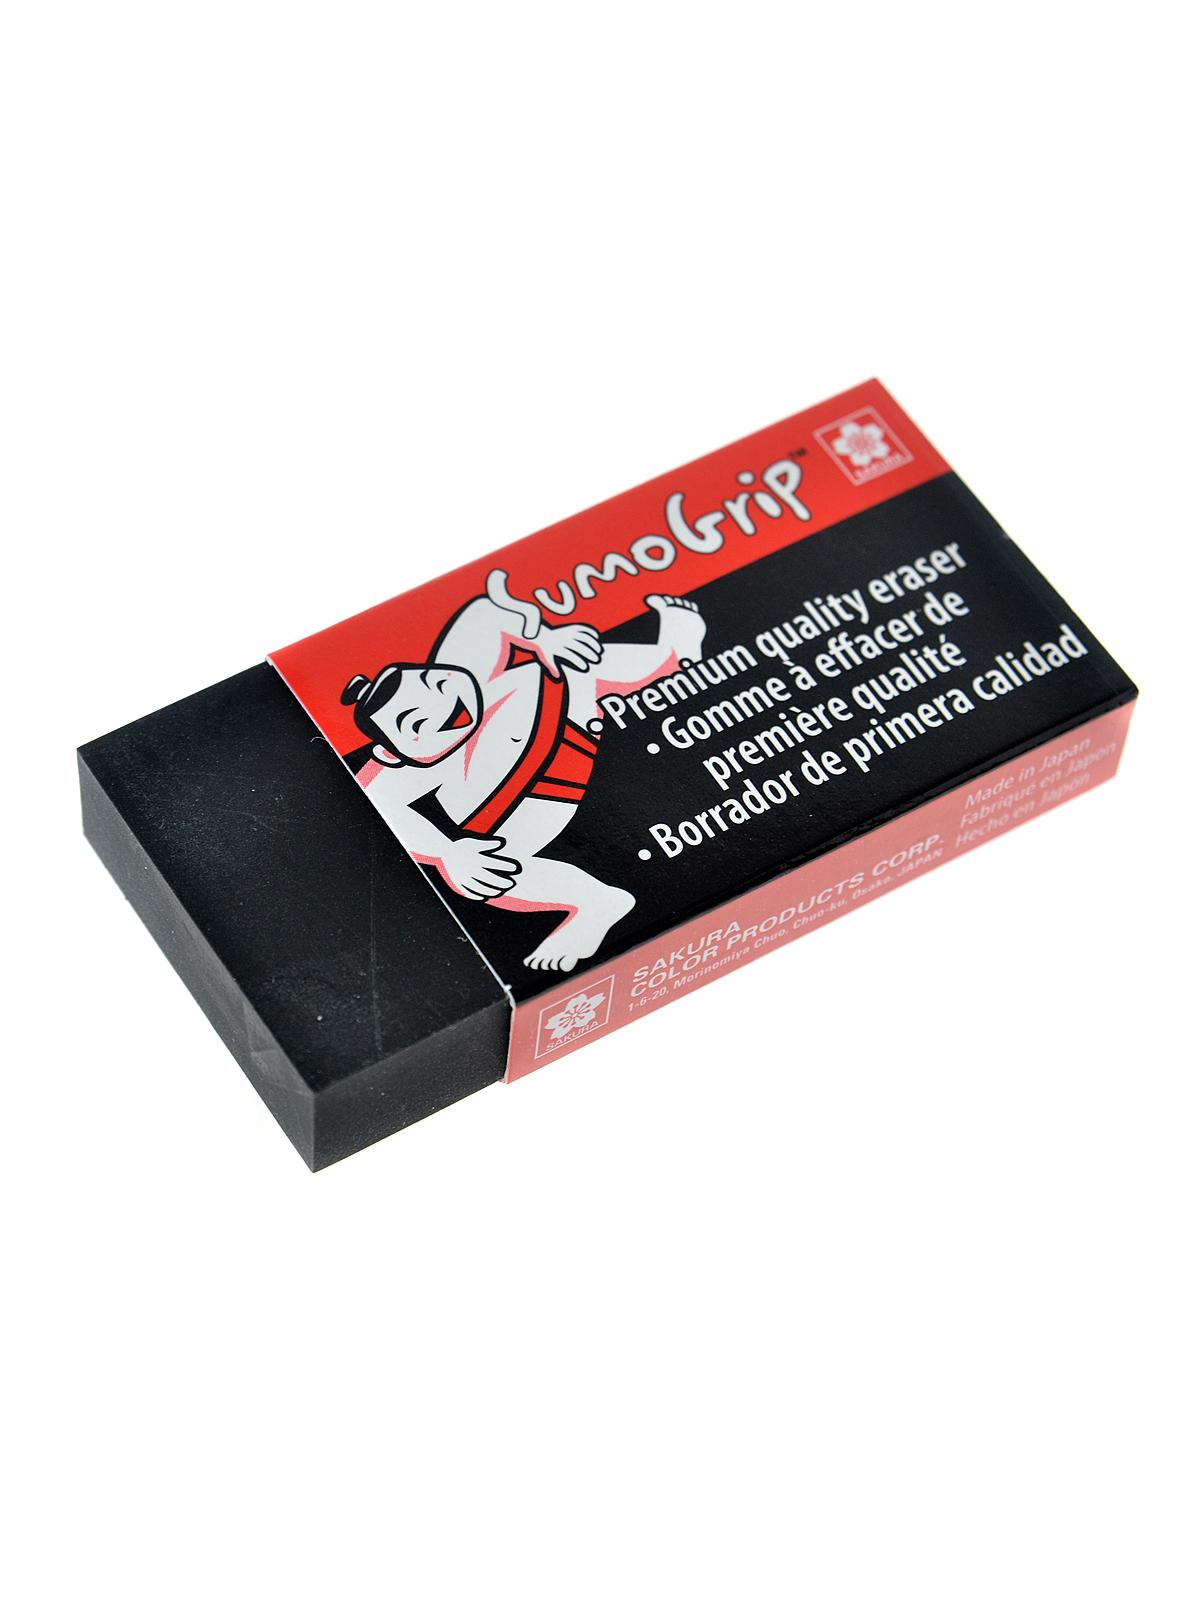 Sumogrip Premium Eraser Block Large B300 Size Each